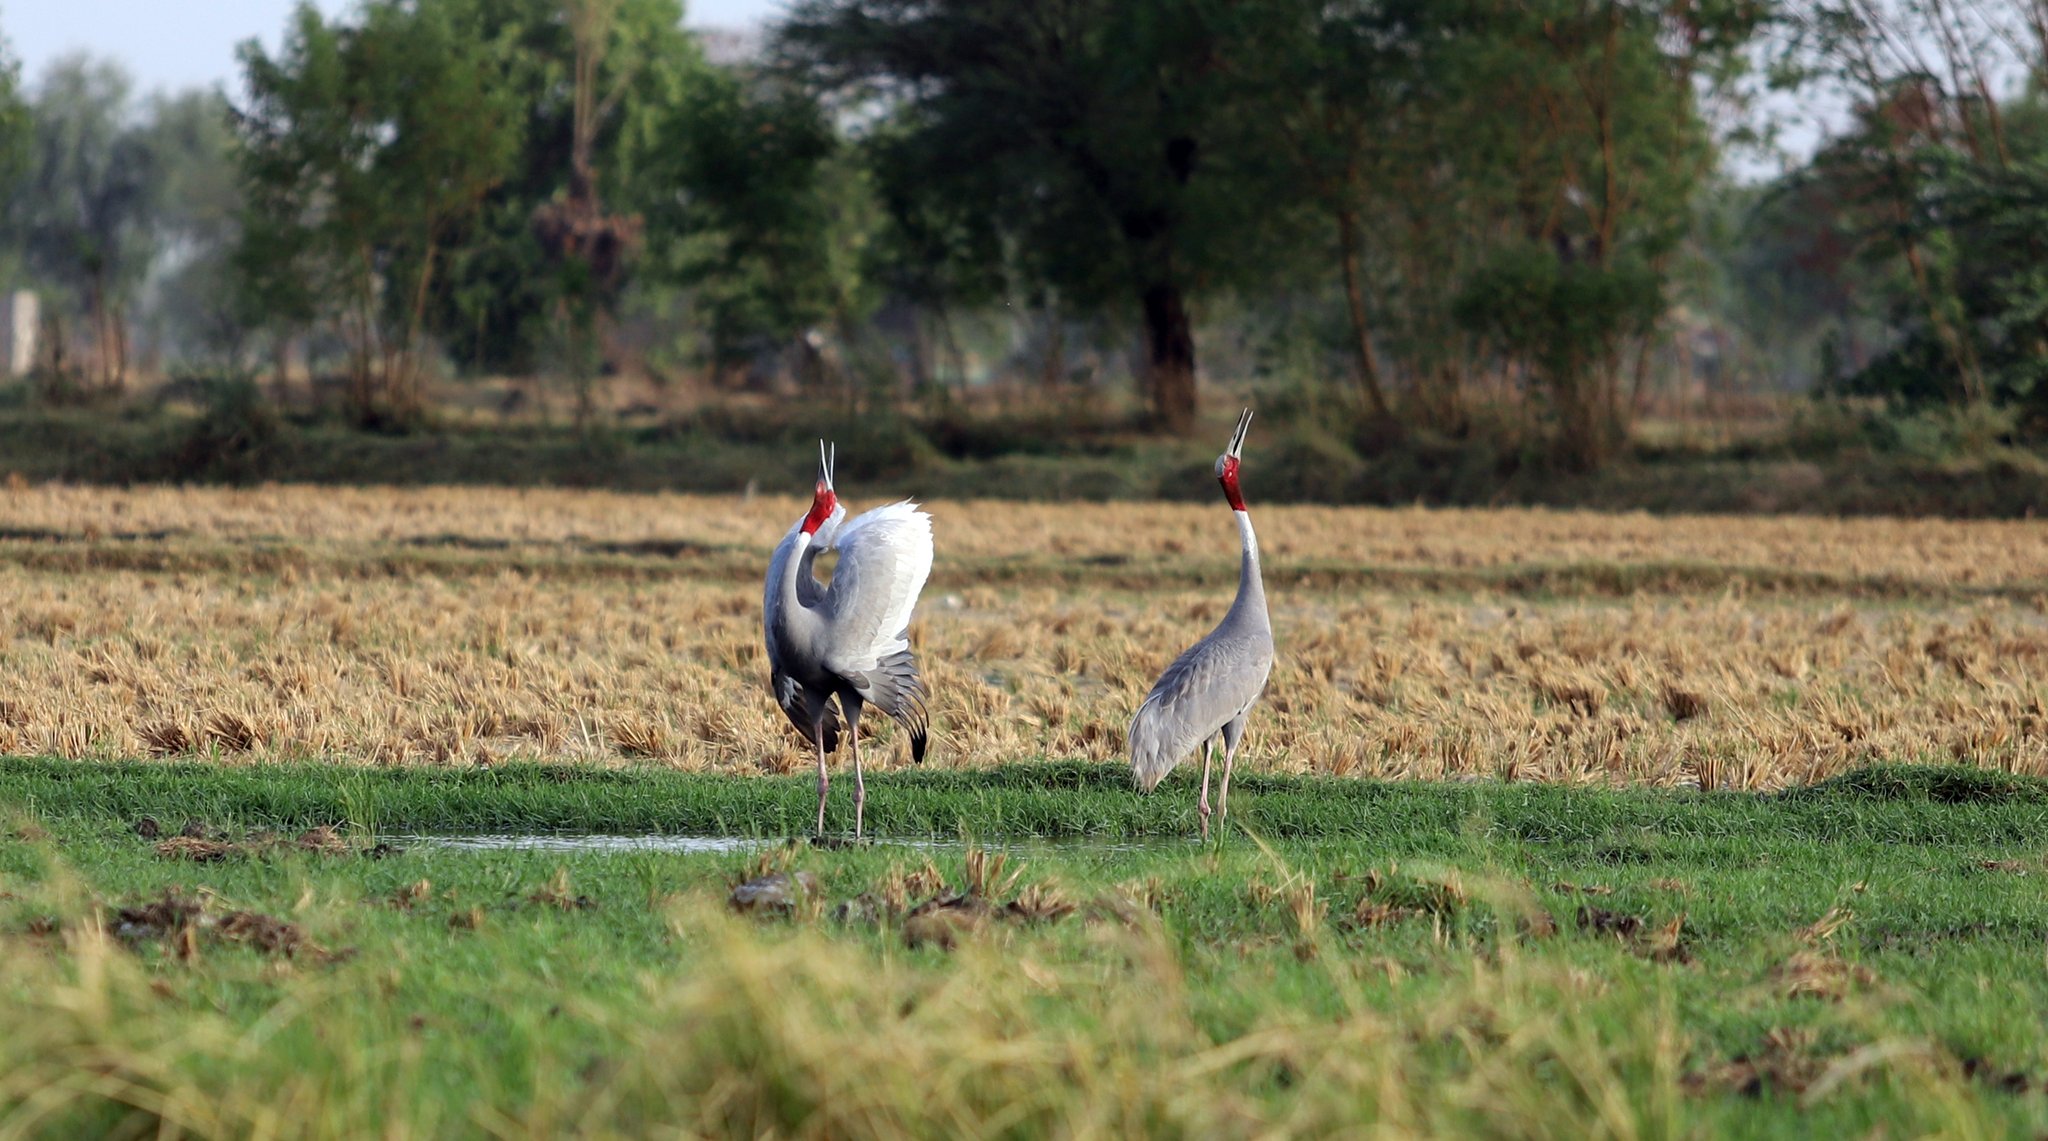 Gujarat locals transform farm into artificial wetland to save saras crane eggs